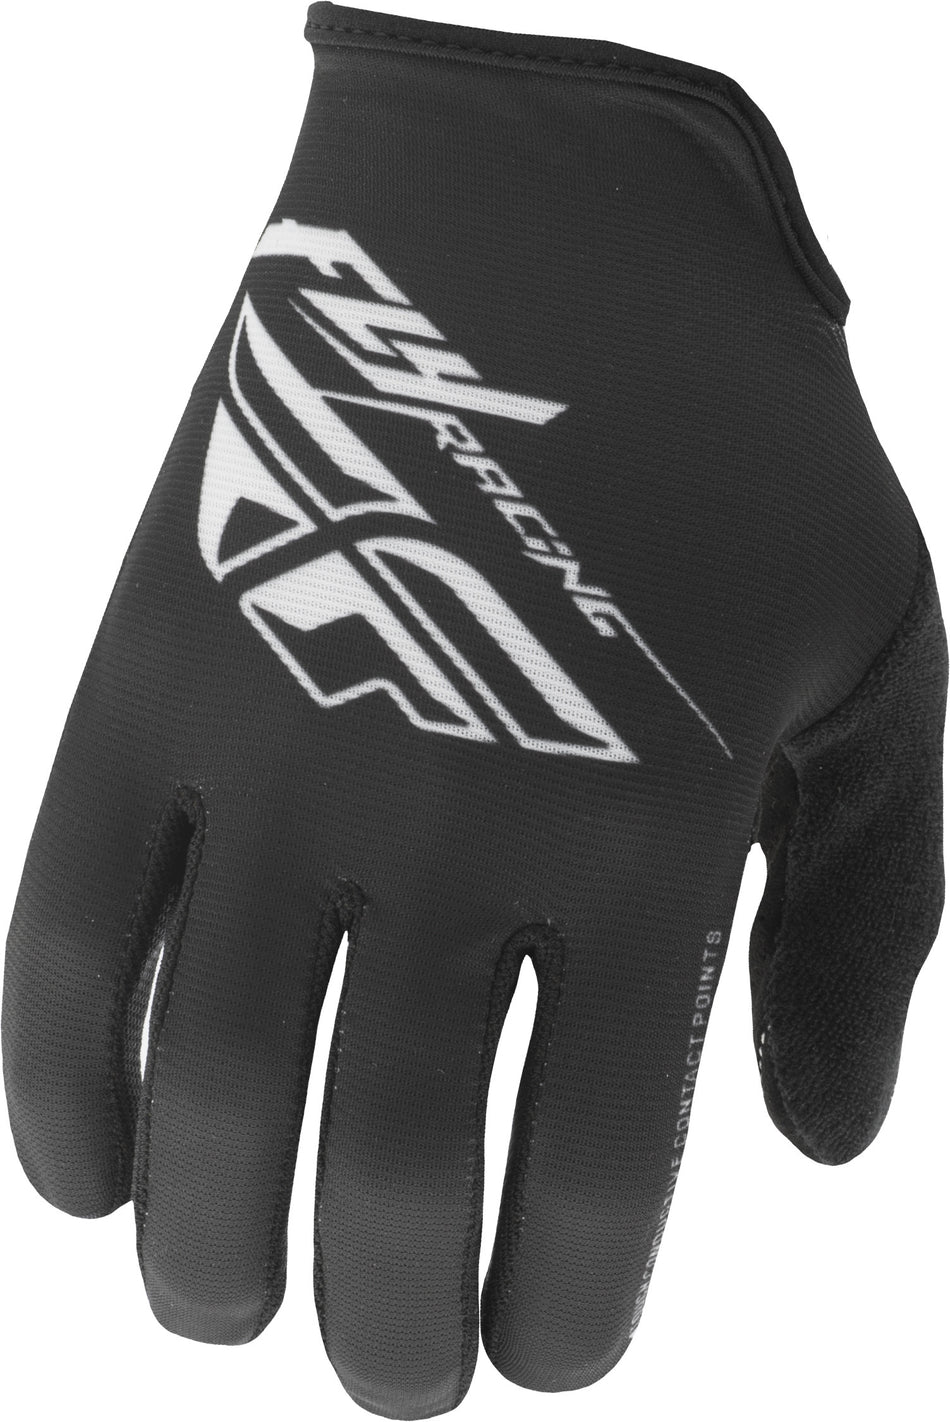 FLY RACING Media Gloves Black Sz 10 350-09010